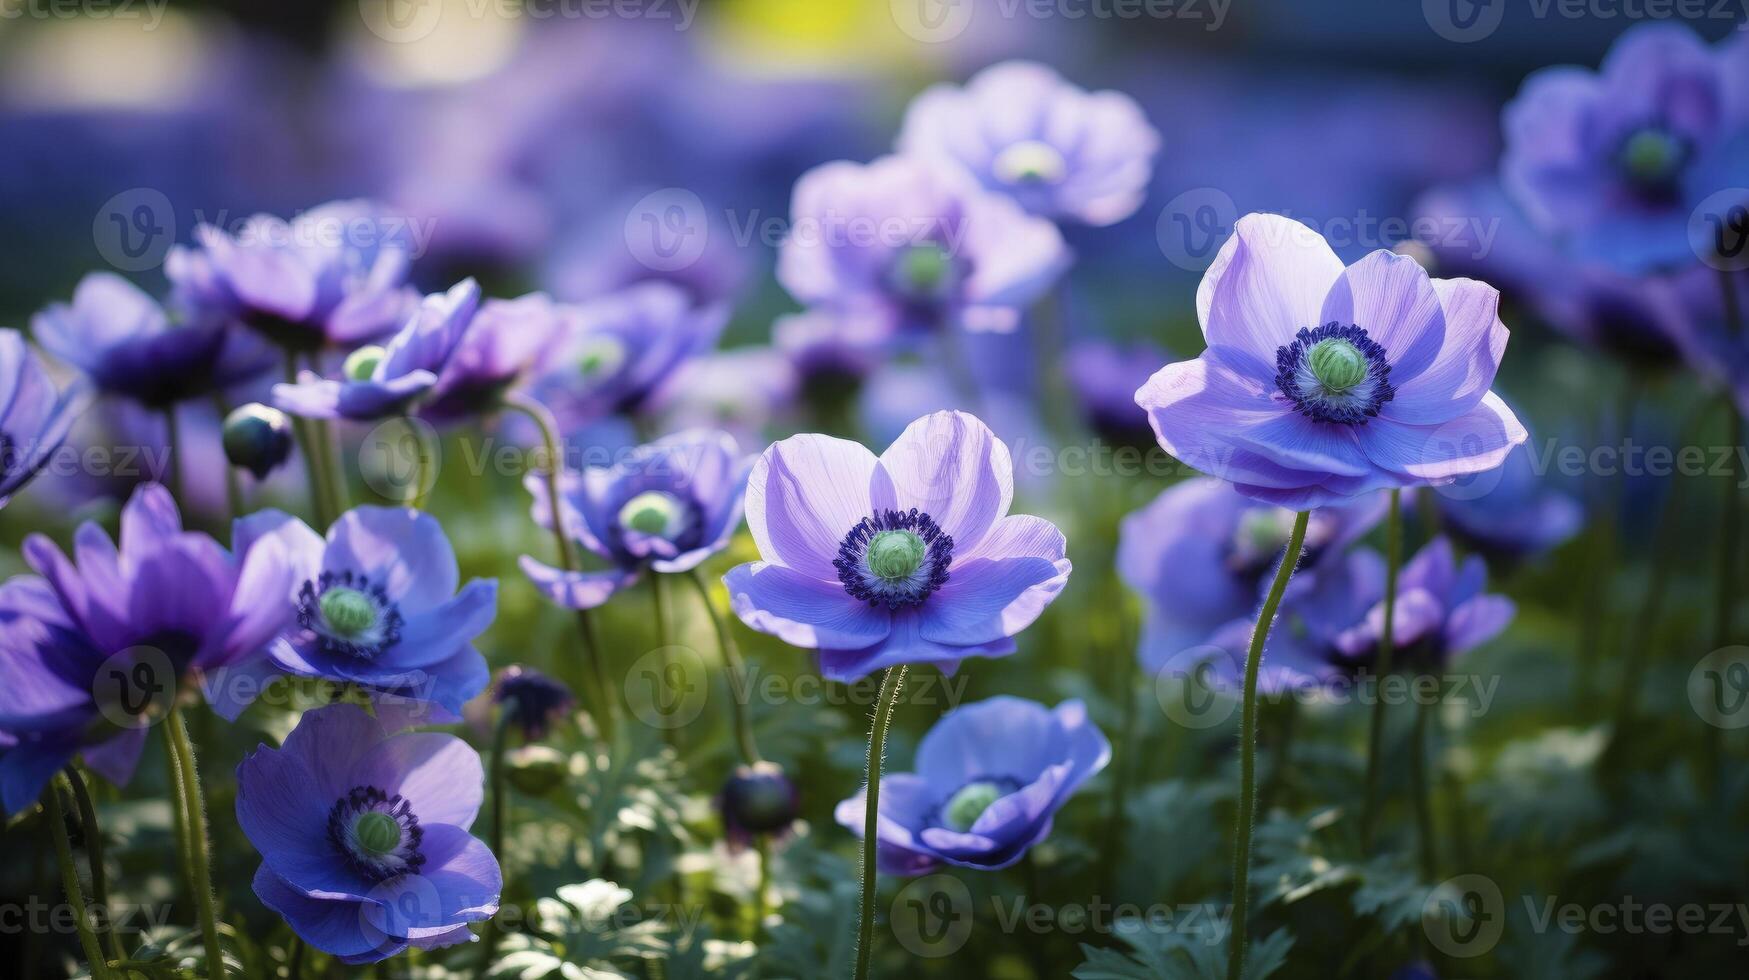 ai generado púrpura anémona flores de cerca al aire libre en verano o primavera foto